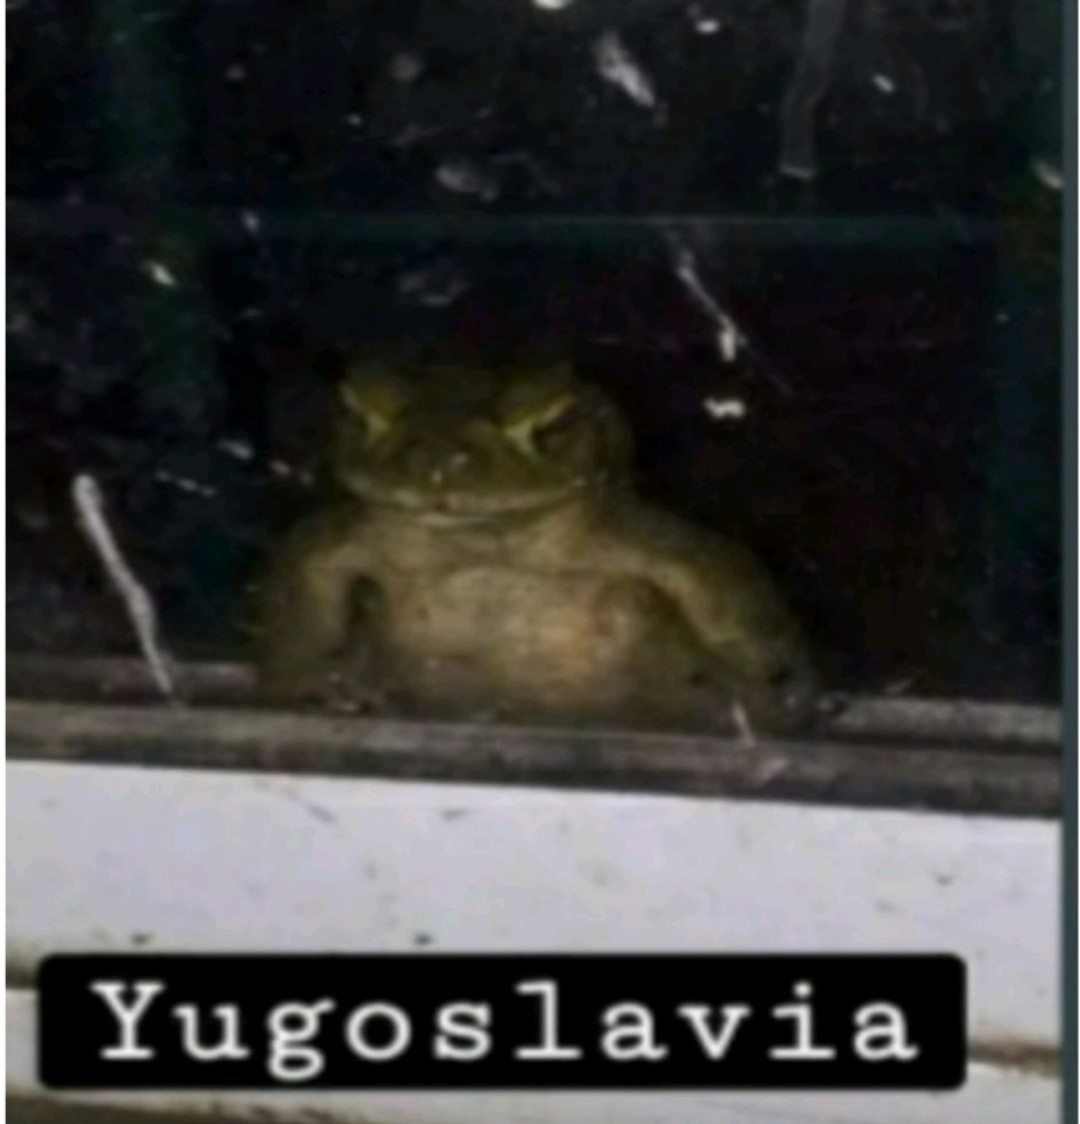 Yugoslavia - meme